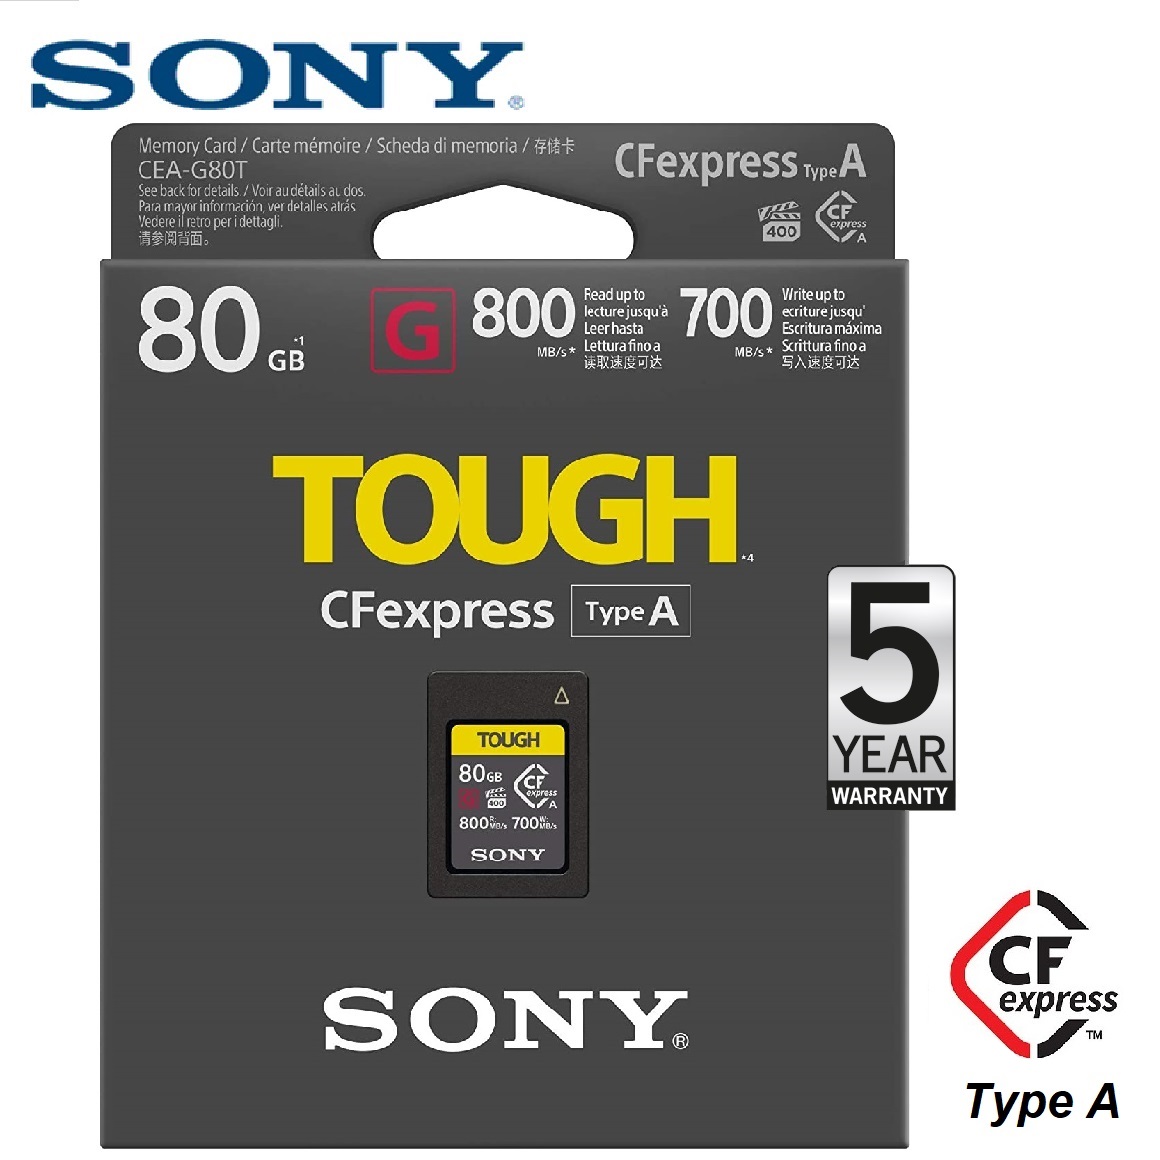 Sony 80GB CF Express  Type A TOUGH